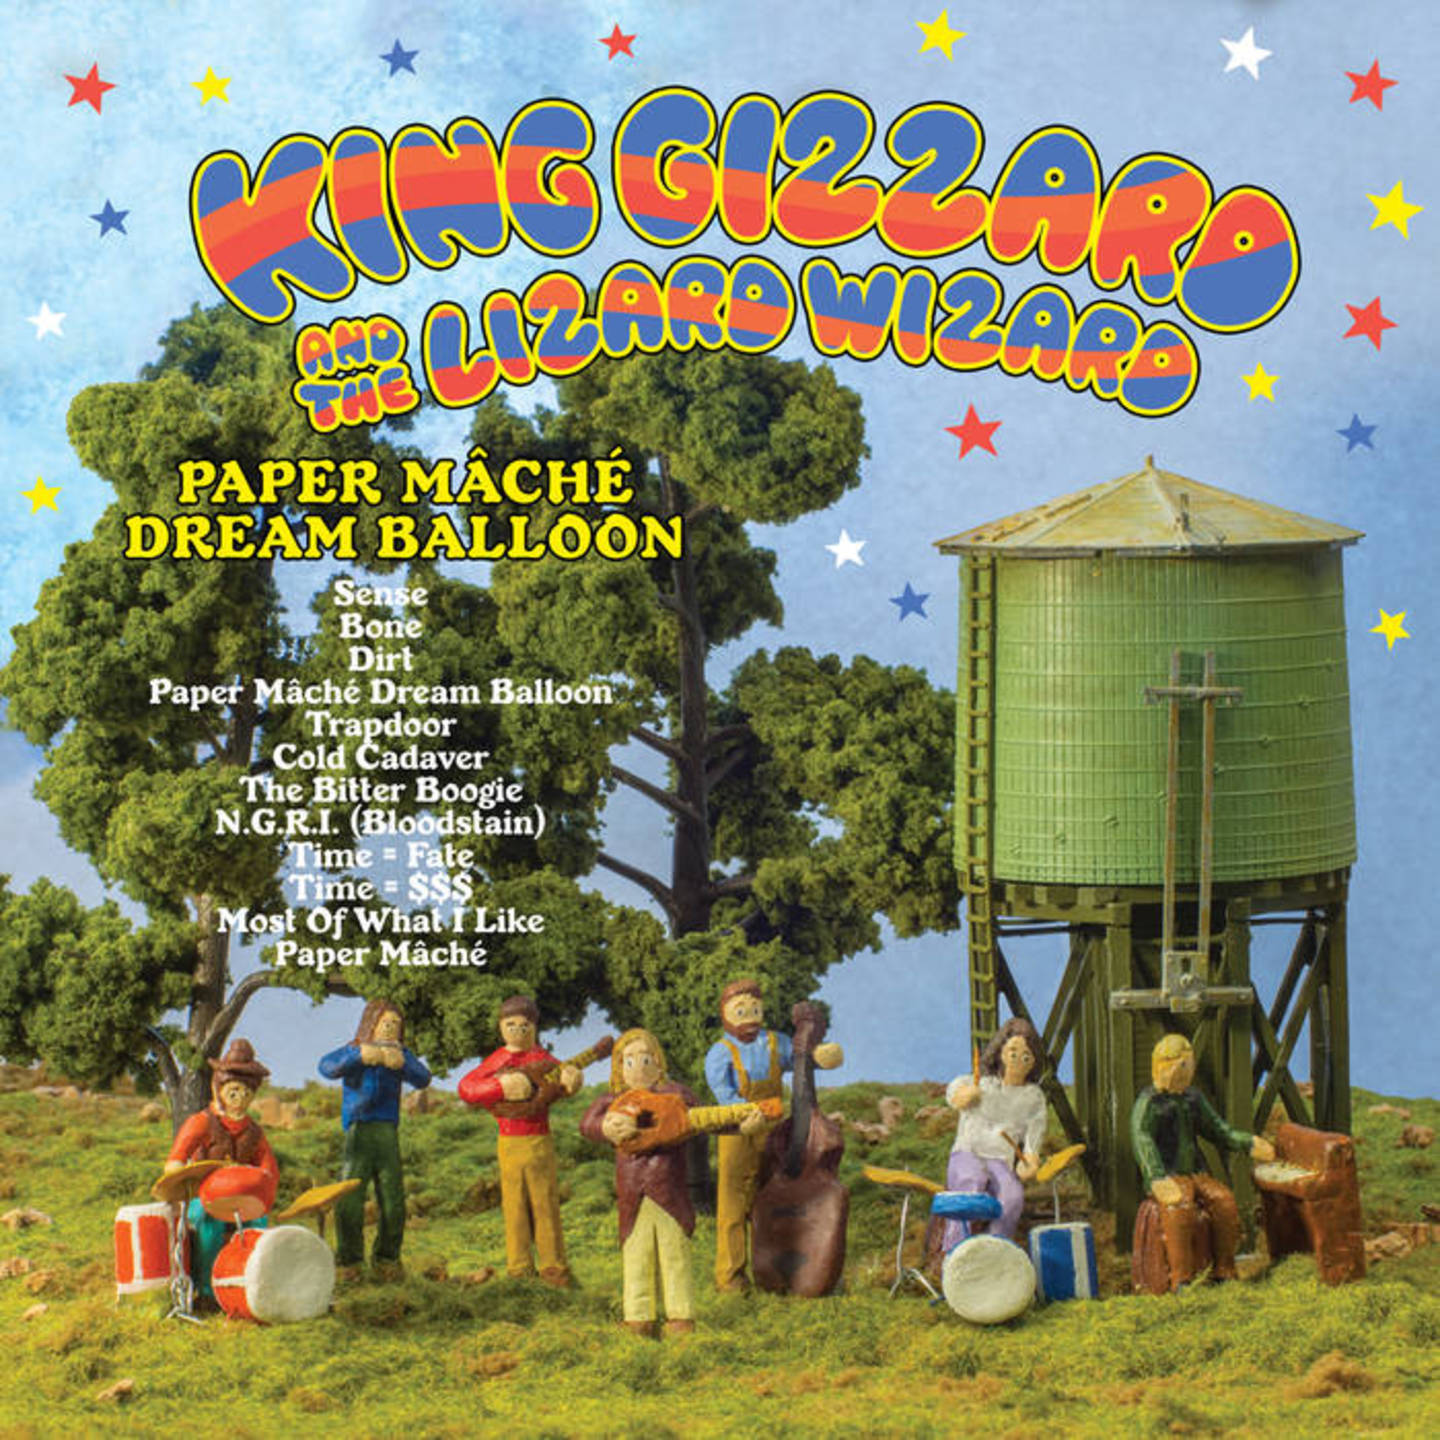 KING GIZZARD AND THE LIZARD WIZARD - Paper Mache Dream Balloon LP Orange vinyl